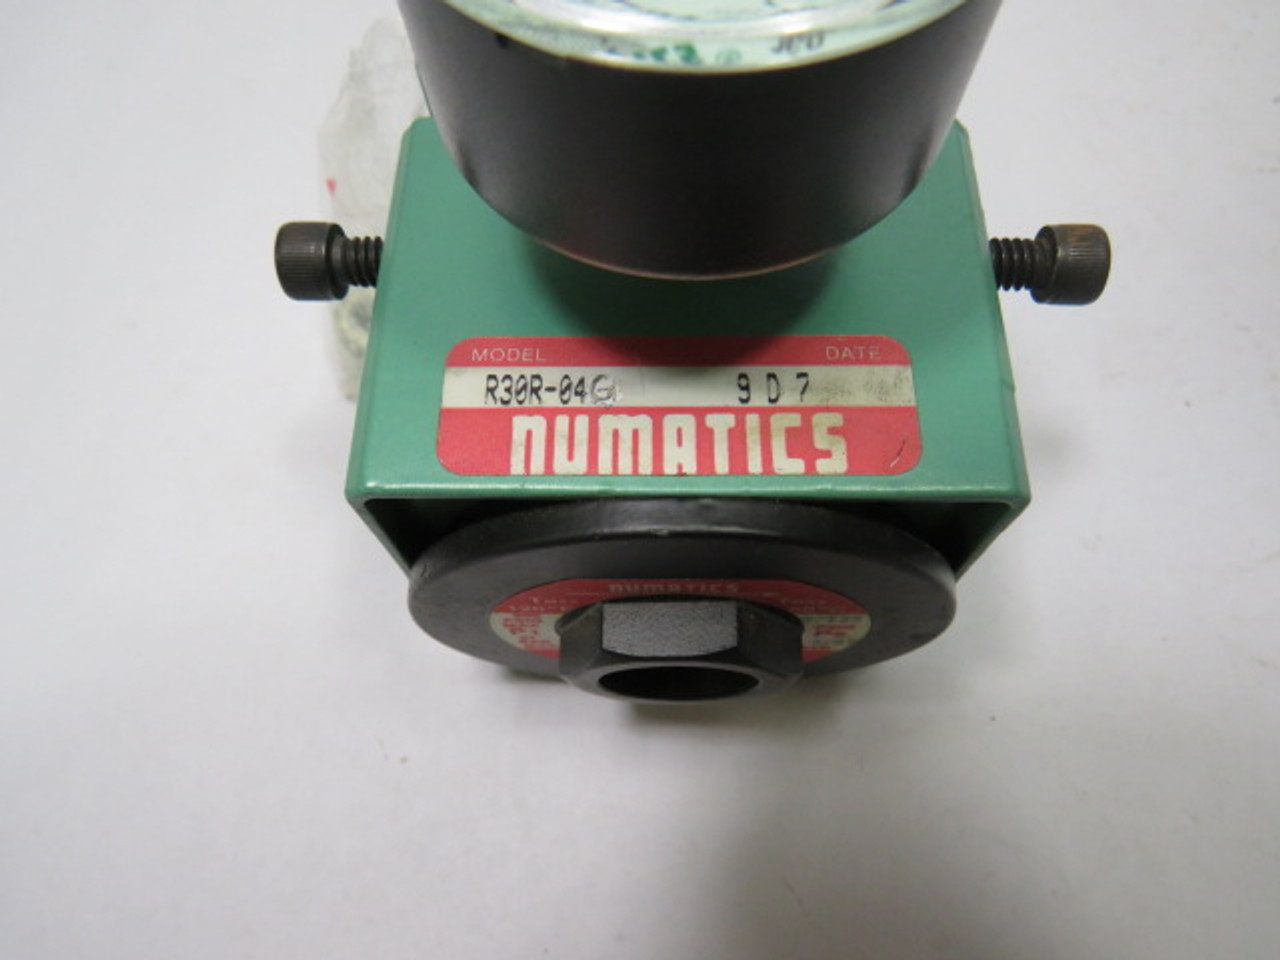 Numatics R30R-04G Pneumatic Regulator Valve w/ Gauge 300PSI 21BAR USED